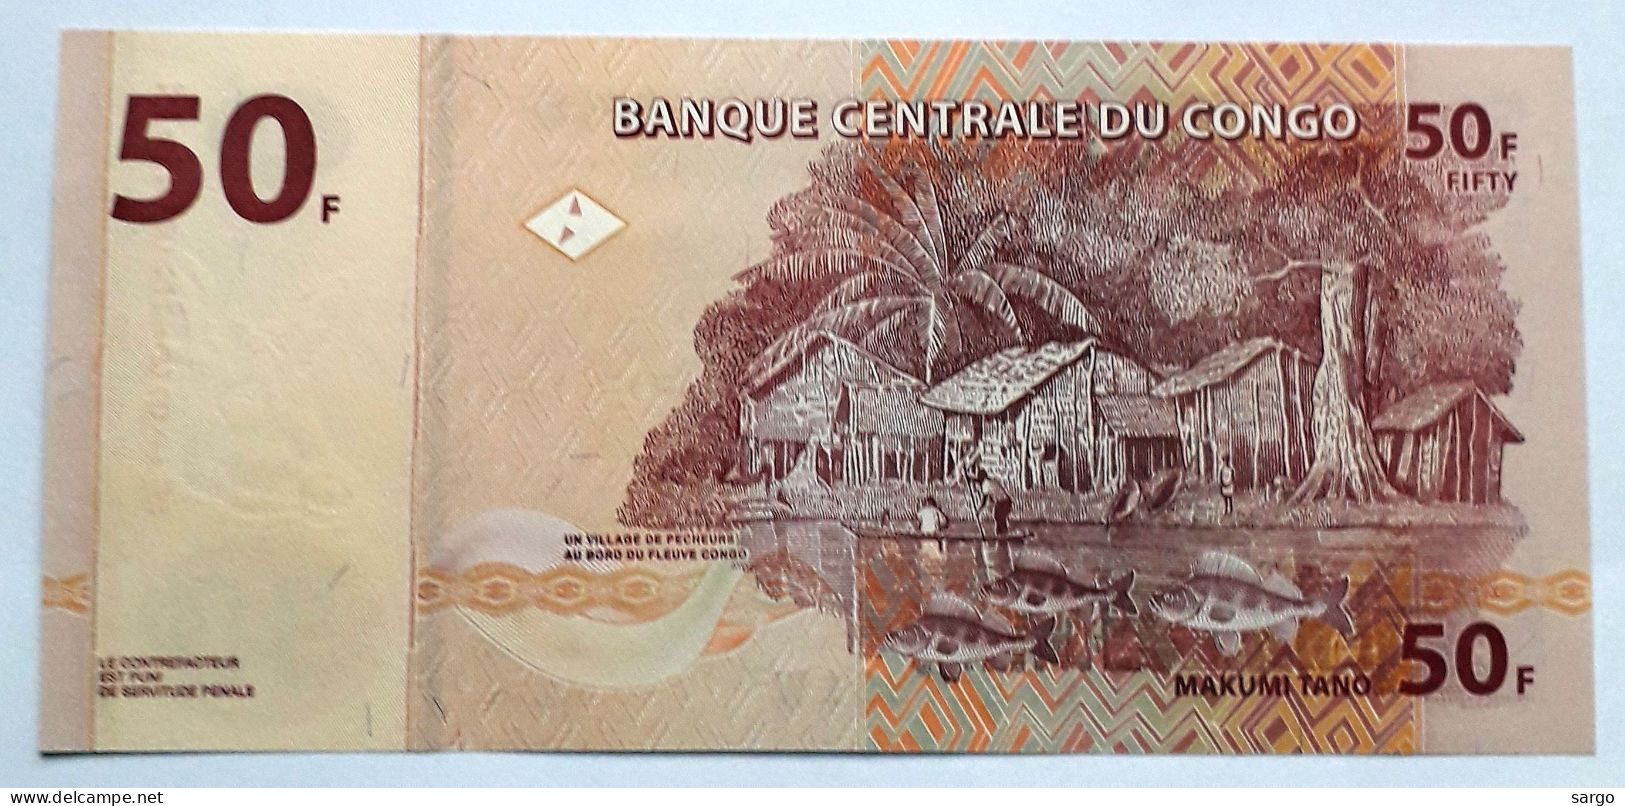 CONGO DEMOCRATIC REPUBLIC - 50 FRANCS  - P 91 (2007) - UNC - BANKNOTES - PAPER MONEY - CARTAMONETA - - Democratic Republic Of The Congo & Zaire